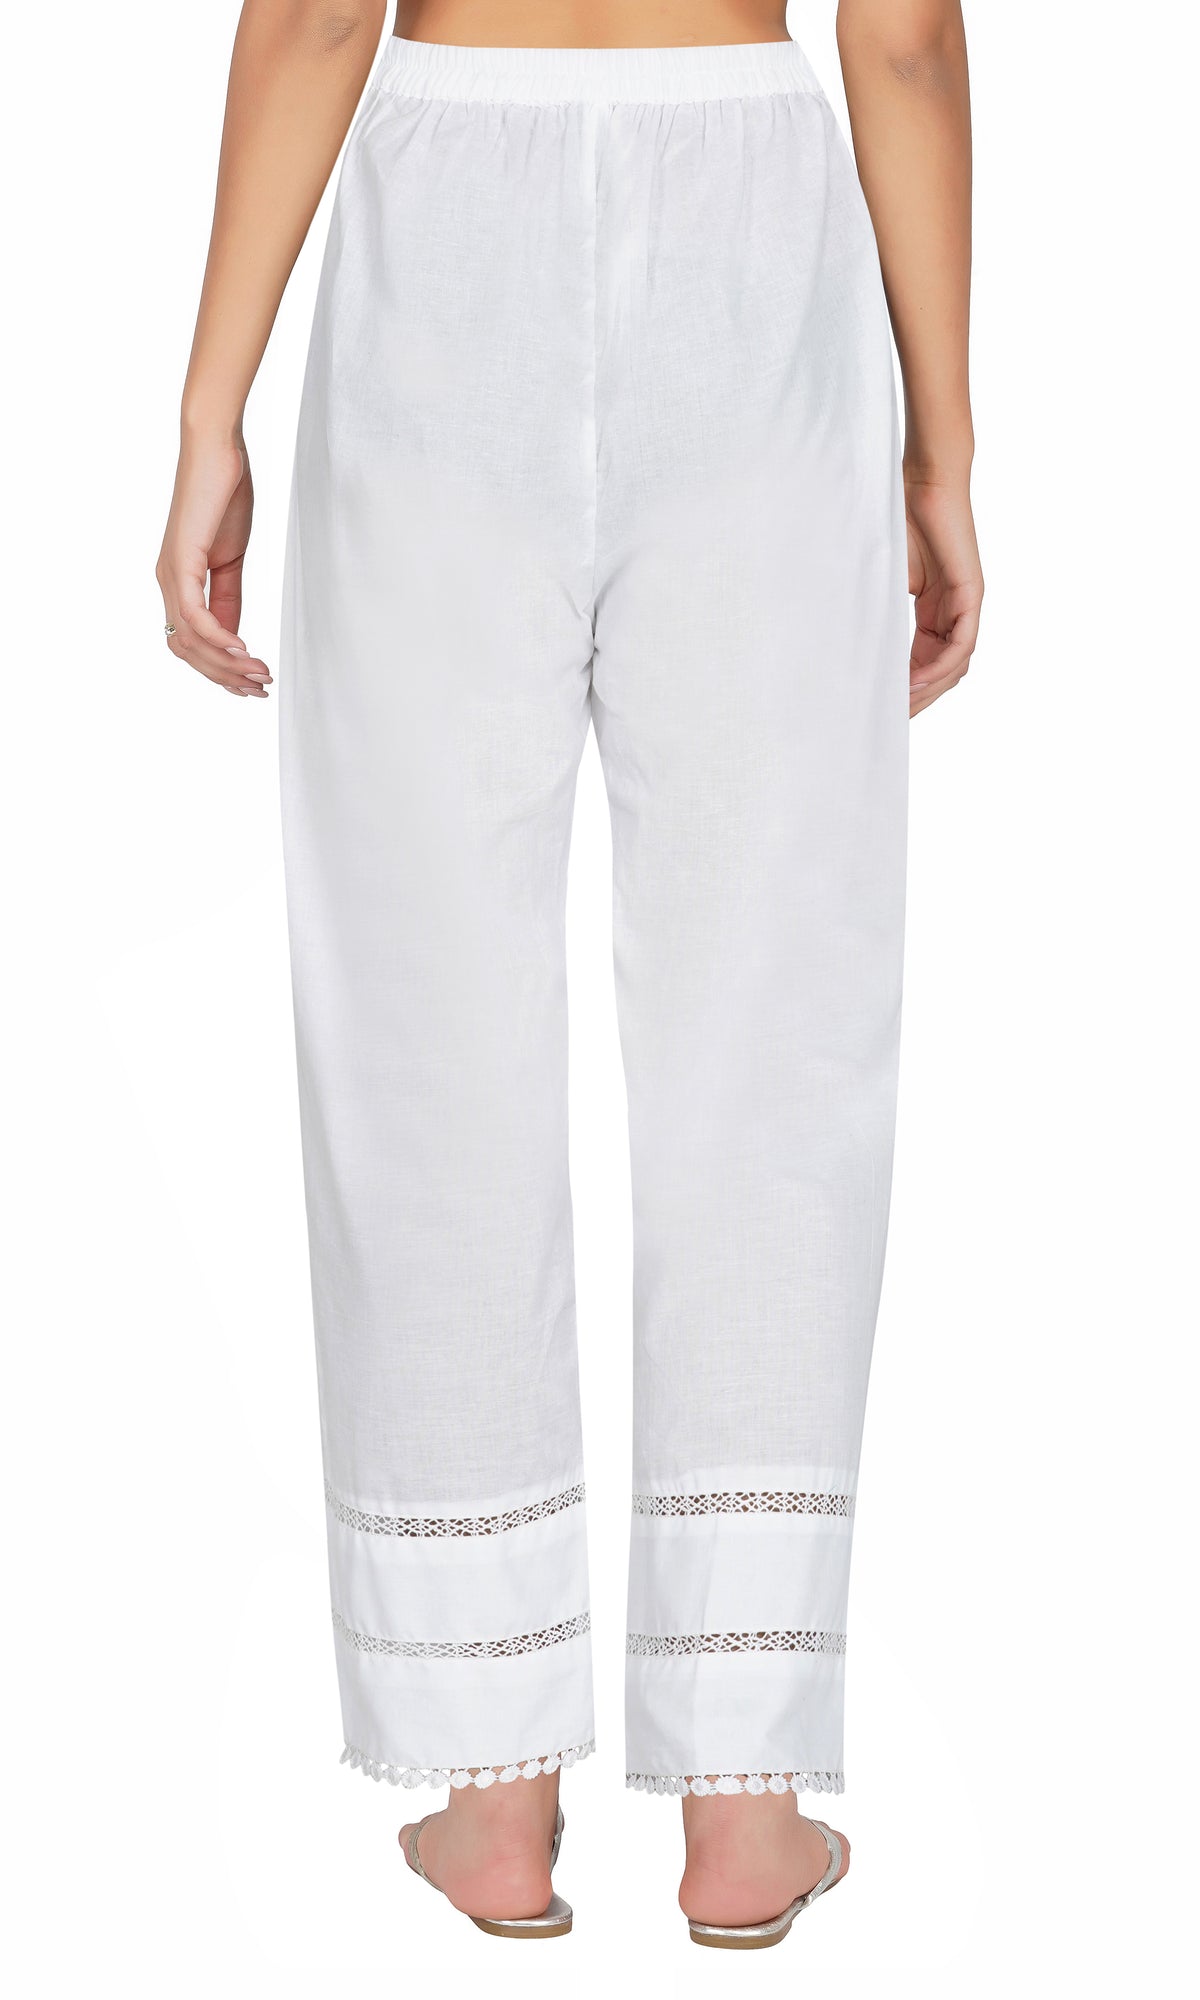 White Lace Work Cotton Pants